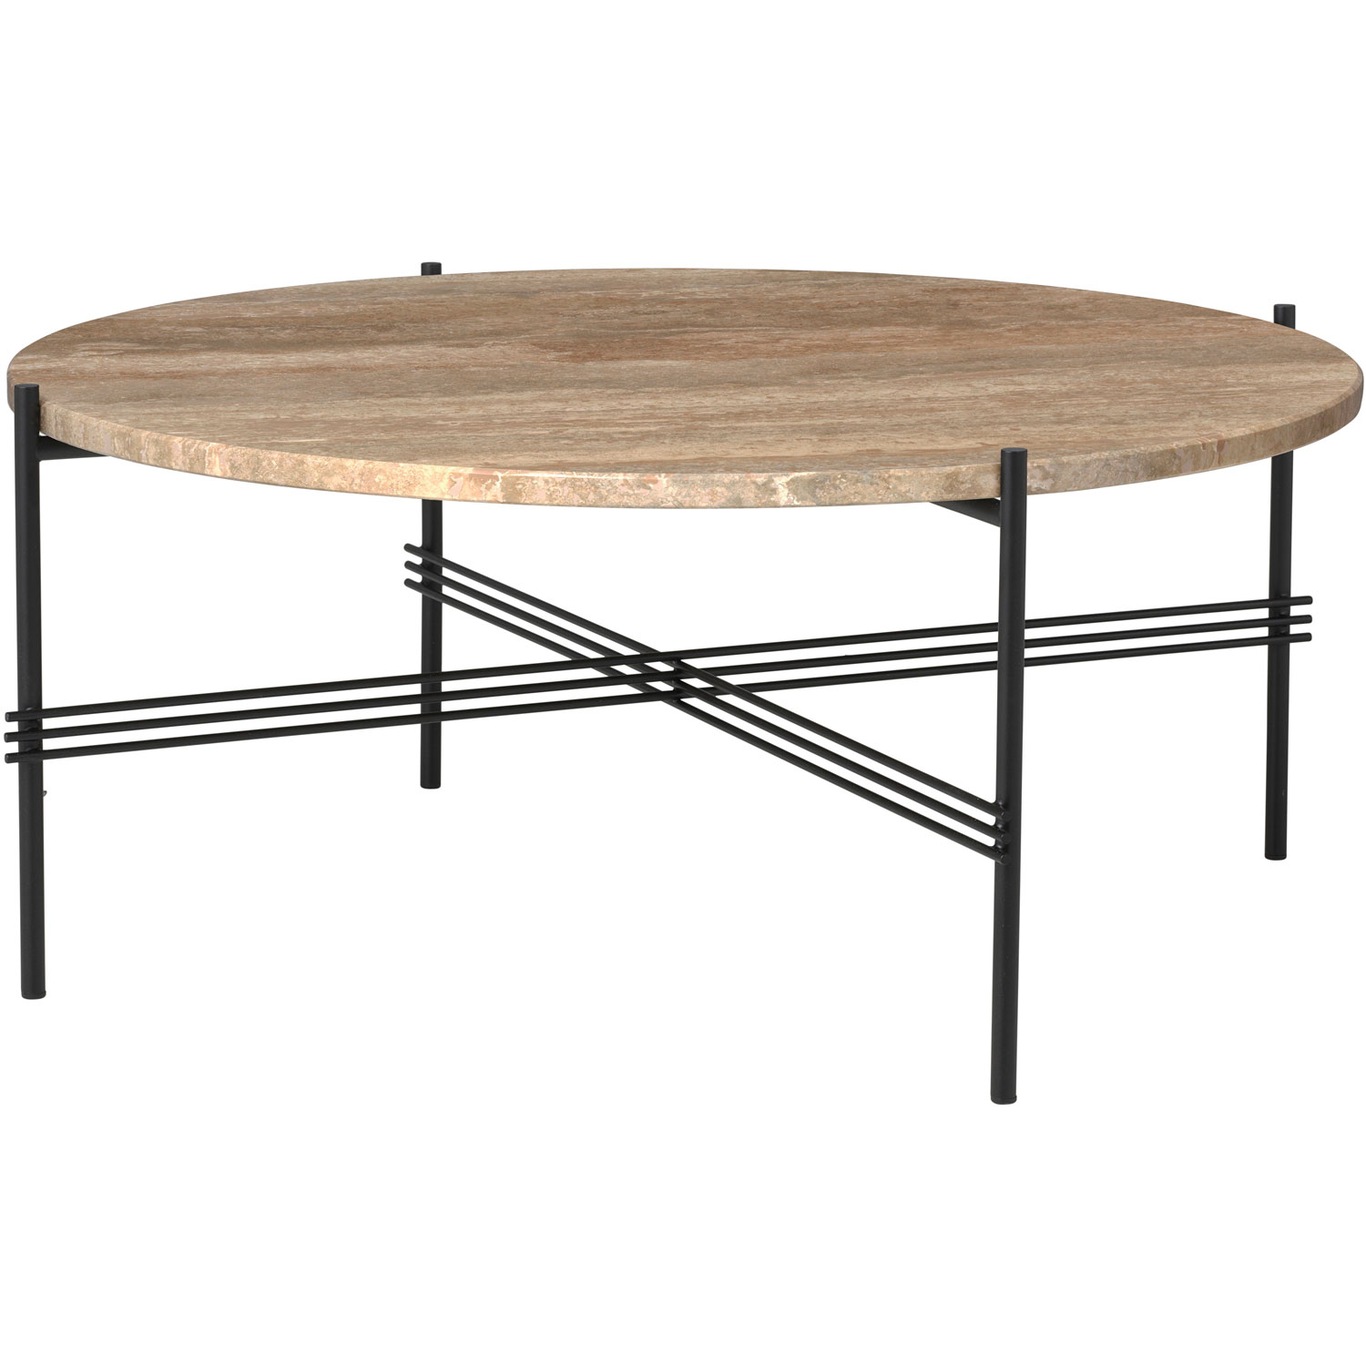 TS Coffee Table 80 cm, Black / Warm taupe Travertine